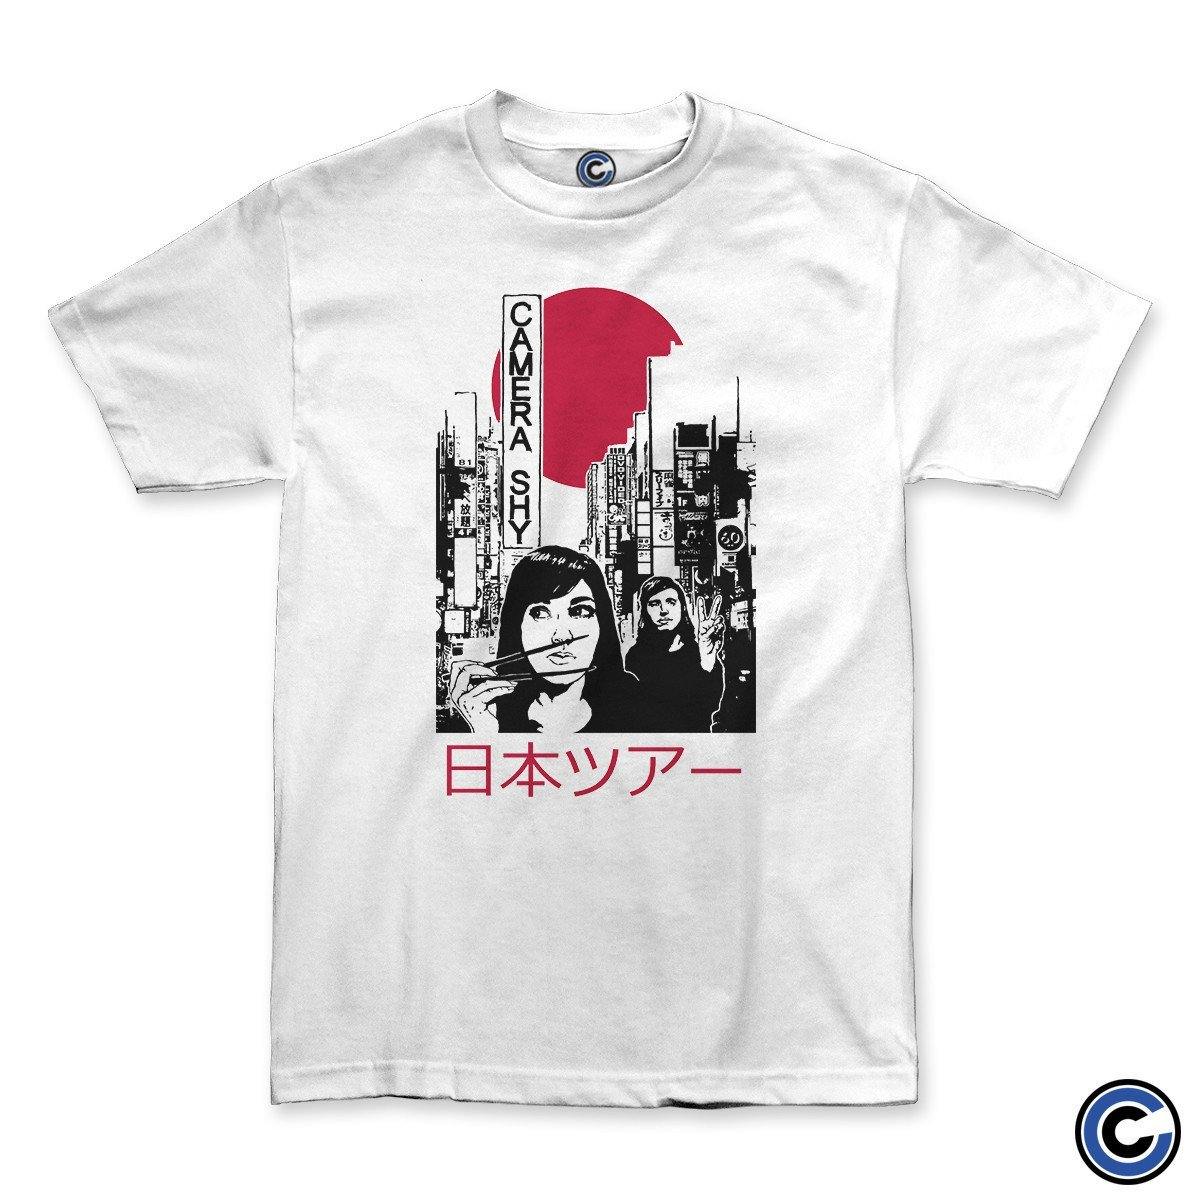 Buy – Camera Shy "Japan" Shirt – Band & Music Merch – Cold Cuts Merch